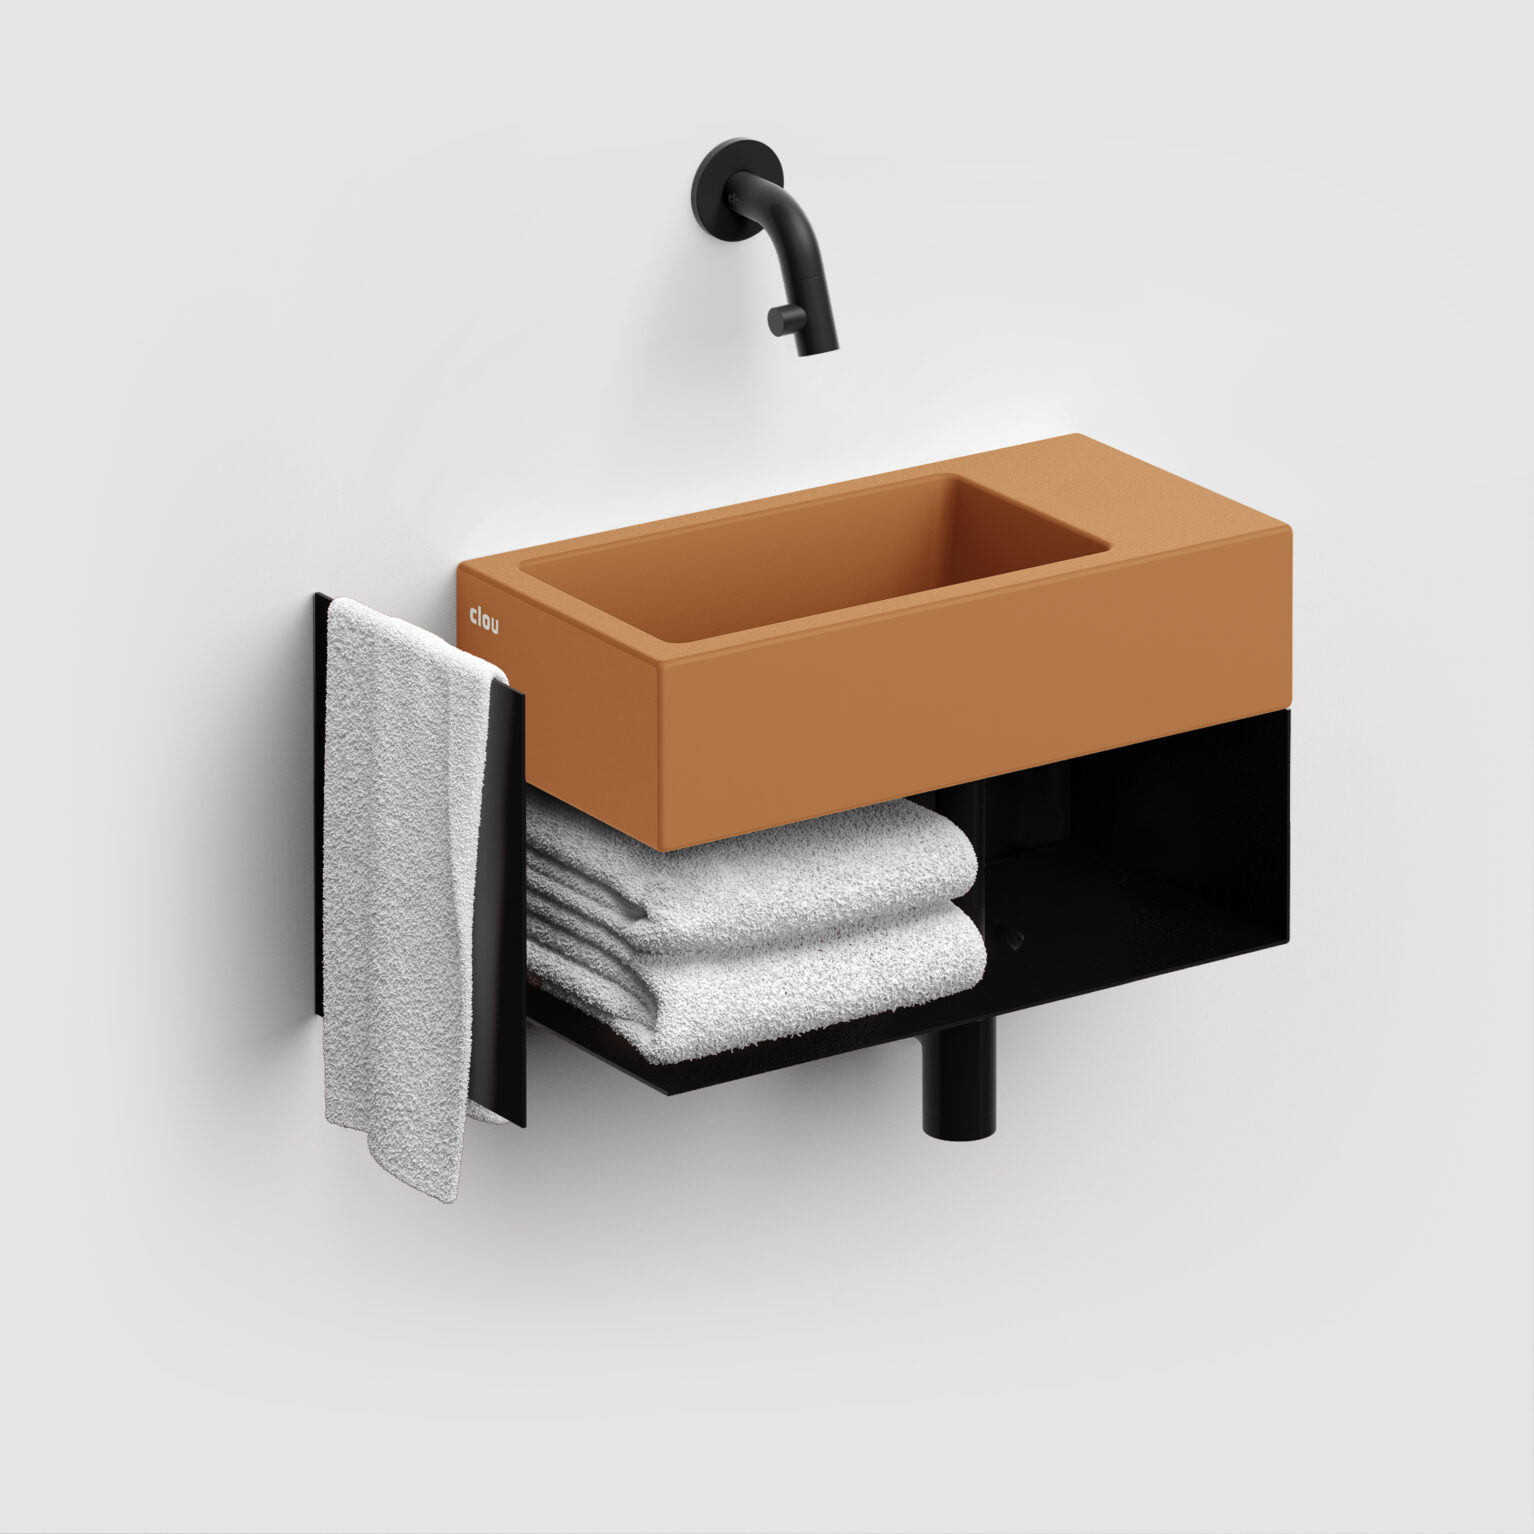 fontein-wastafel-italiaans-zand-koper-toilet-badkamer-luxe-sanitair-Flush-3-rechts-clou-CL0336031-keramiek-36cm-wandkraan-open-kast-mat-zwart-handdoek-houder